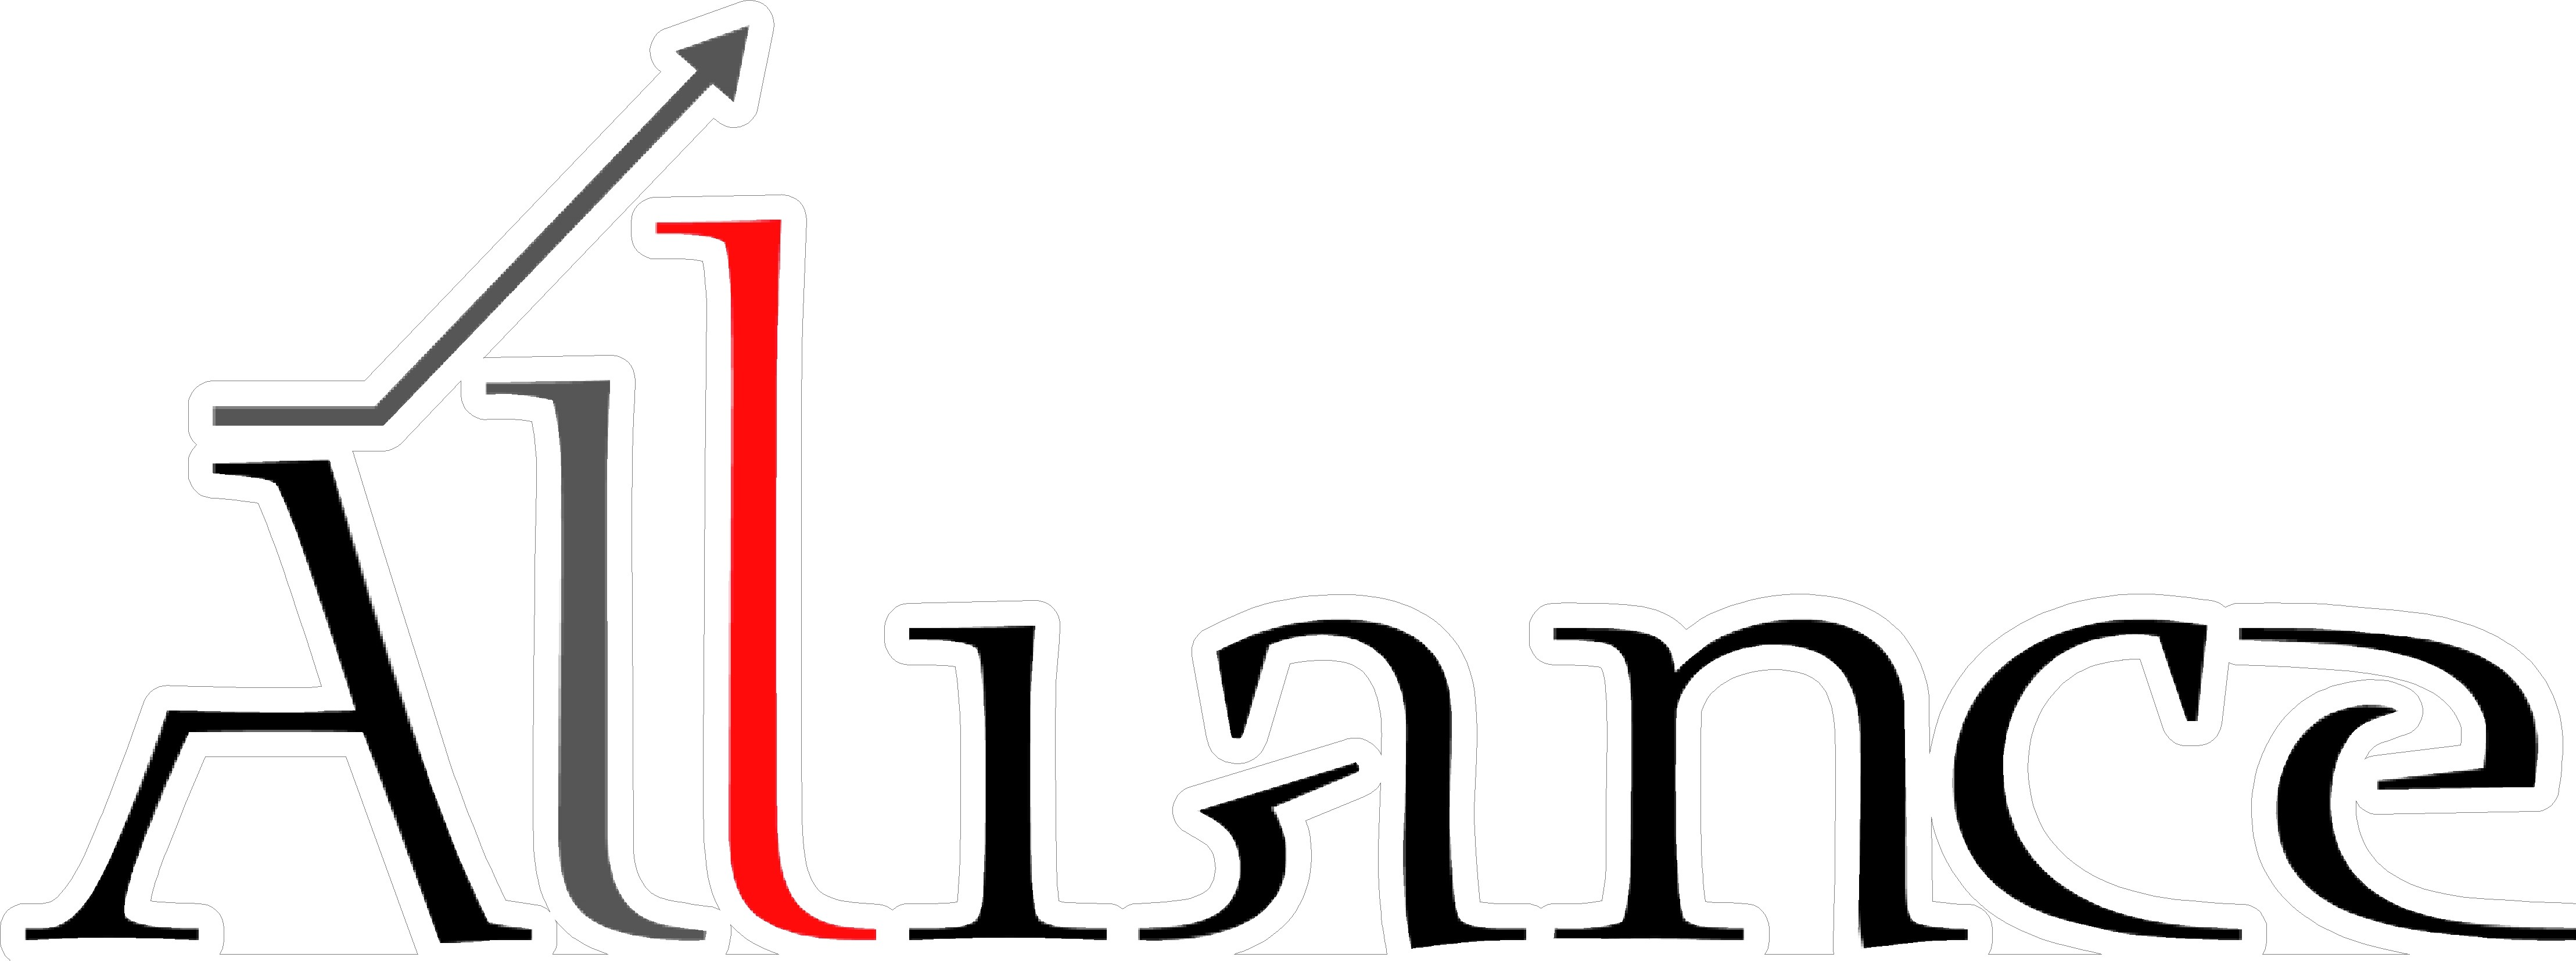 The Alliance Group logo